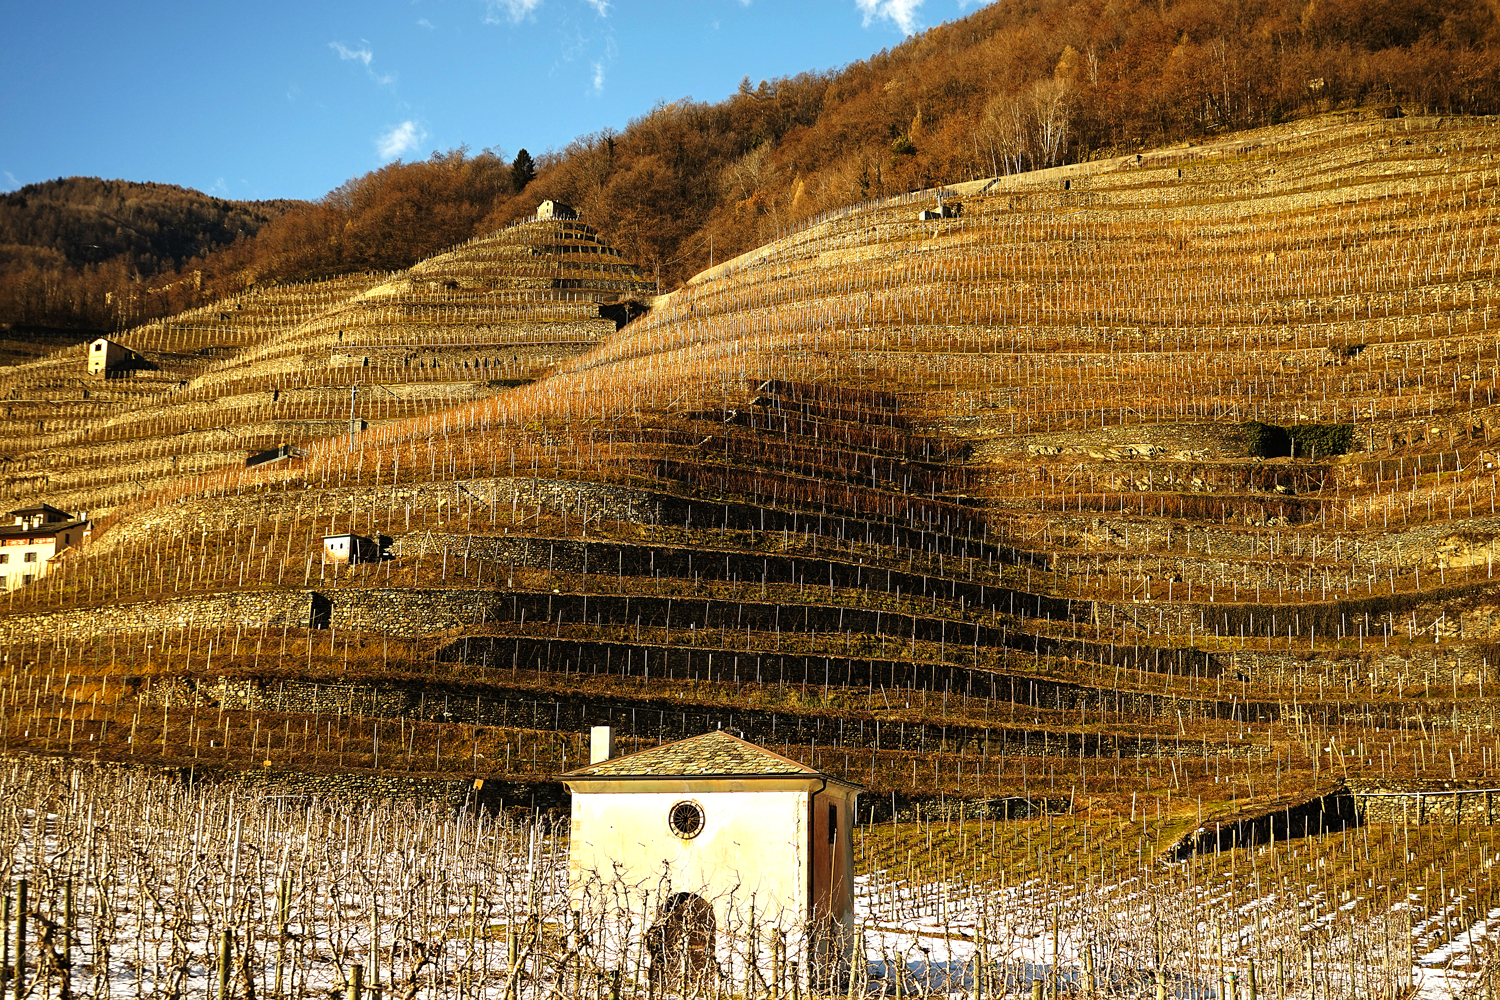 67 kilometres of panoramic road among the terraced vineyards